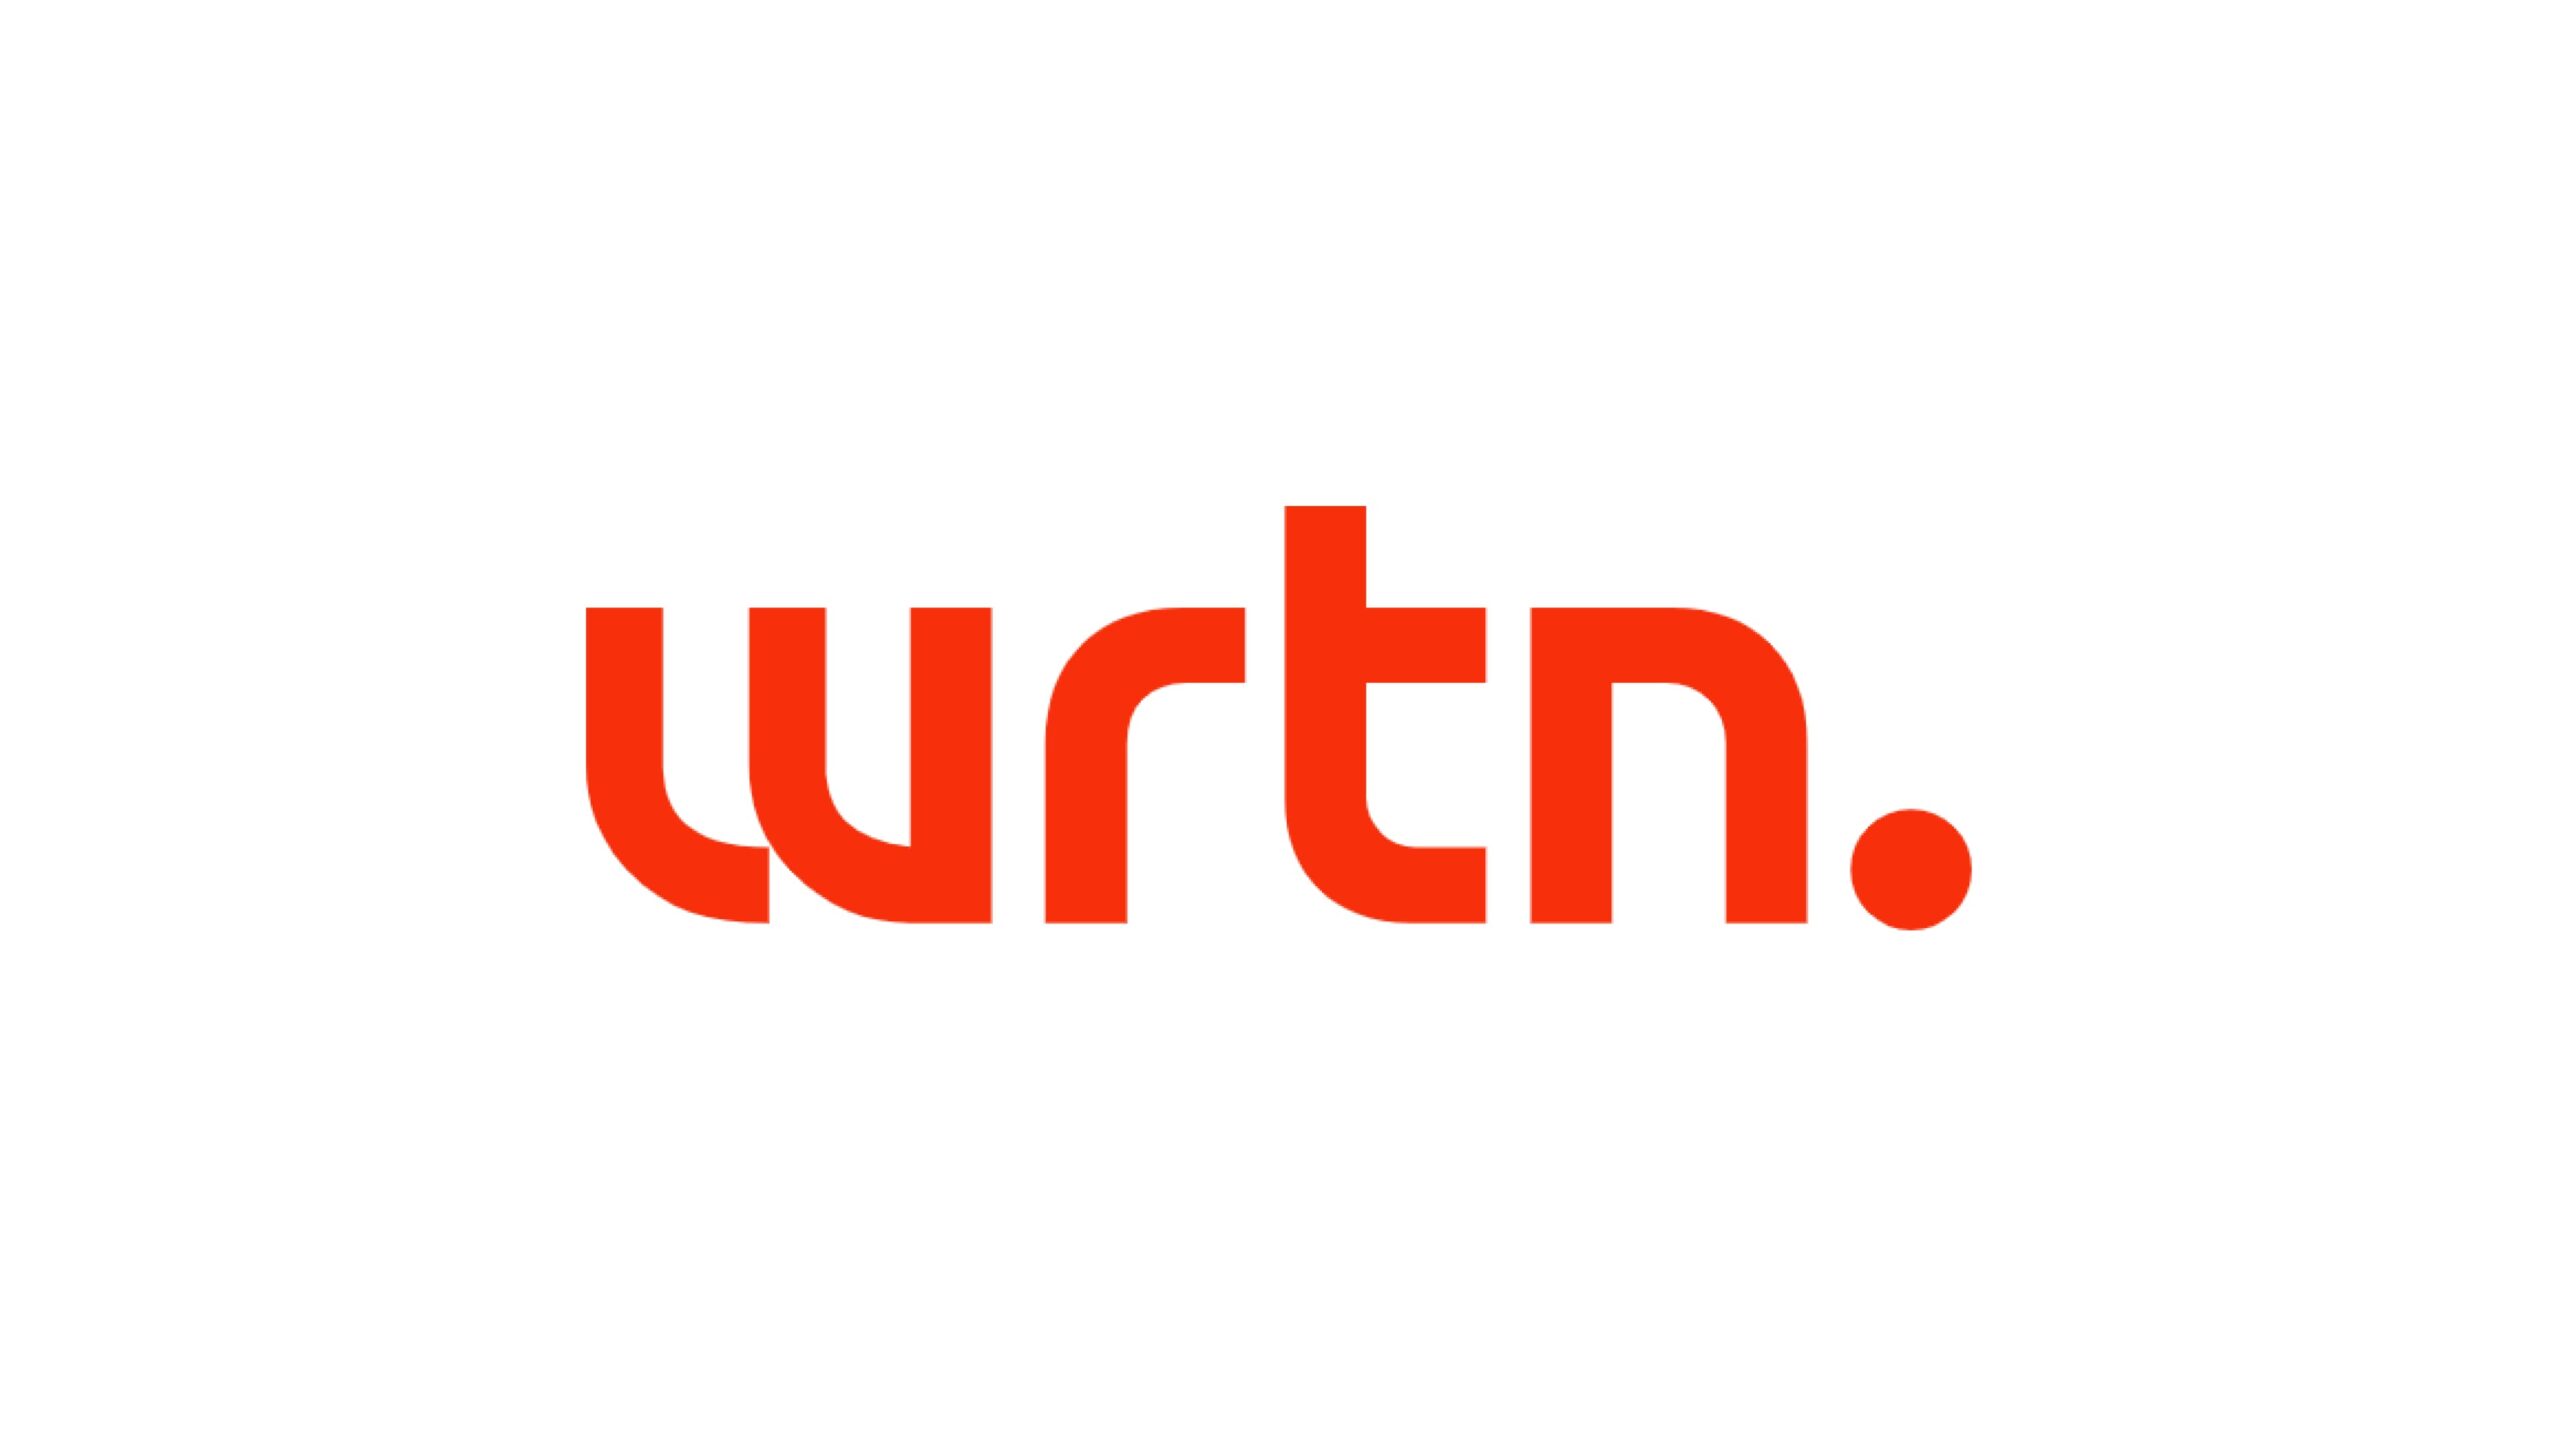 Wrtn Technologies、プレシリーズBラウンドにて約28.4億円の資金調達を実施